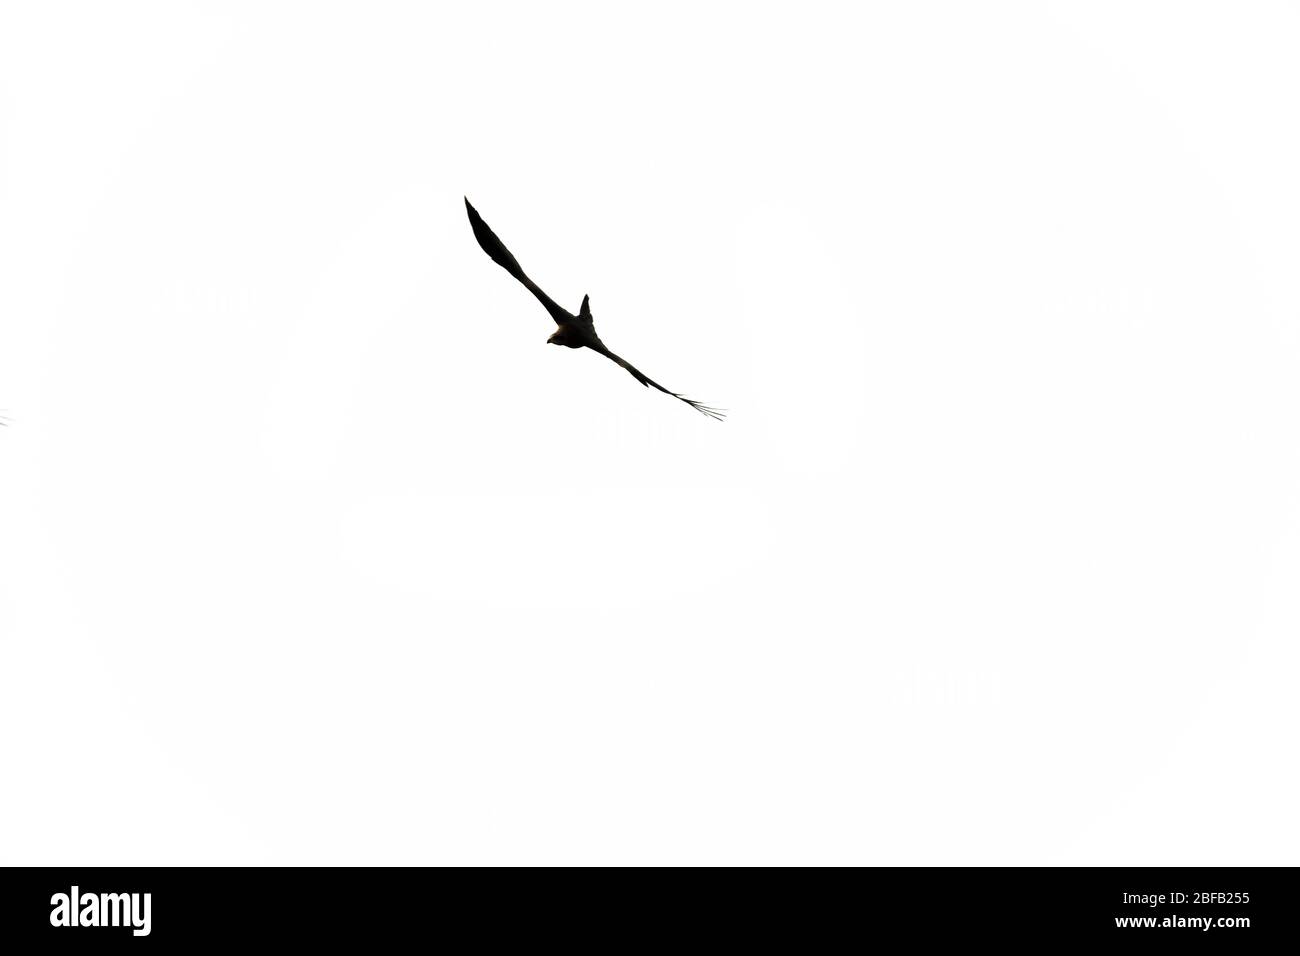 silhouette of eagle bird on white plain background. beautiful eagle flying. Stock Photo